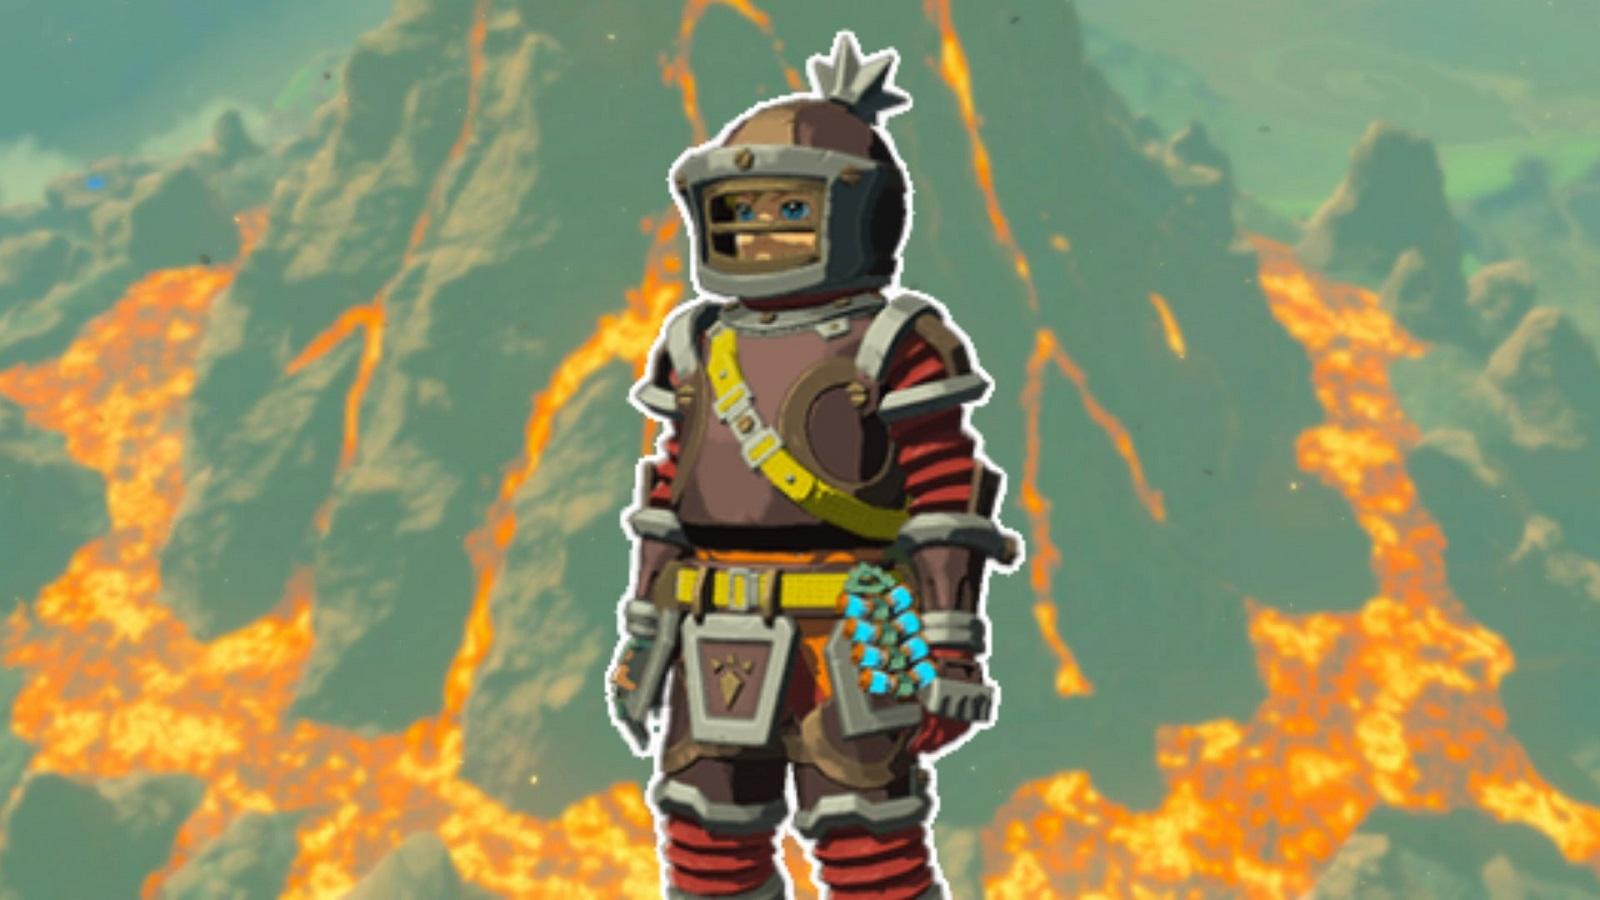 Link wearing the Flamebreaker armor set in Tears of the Kingdom